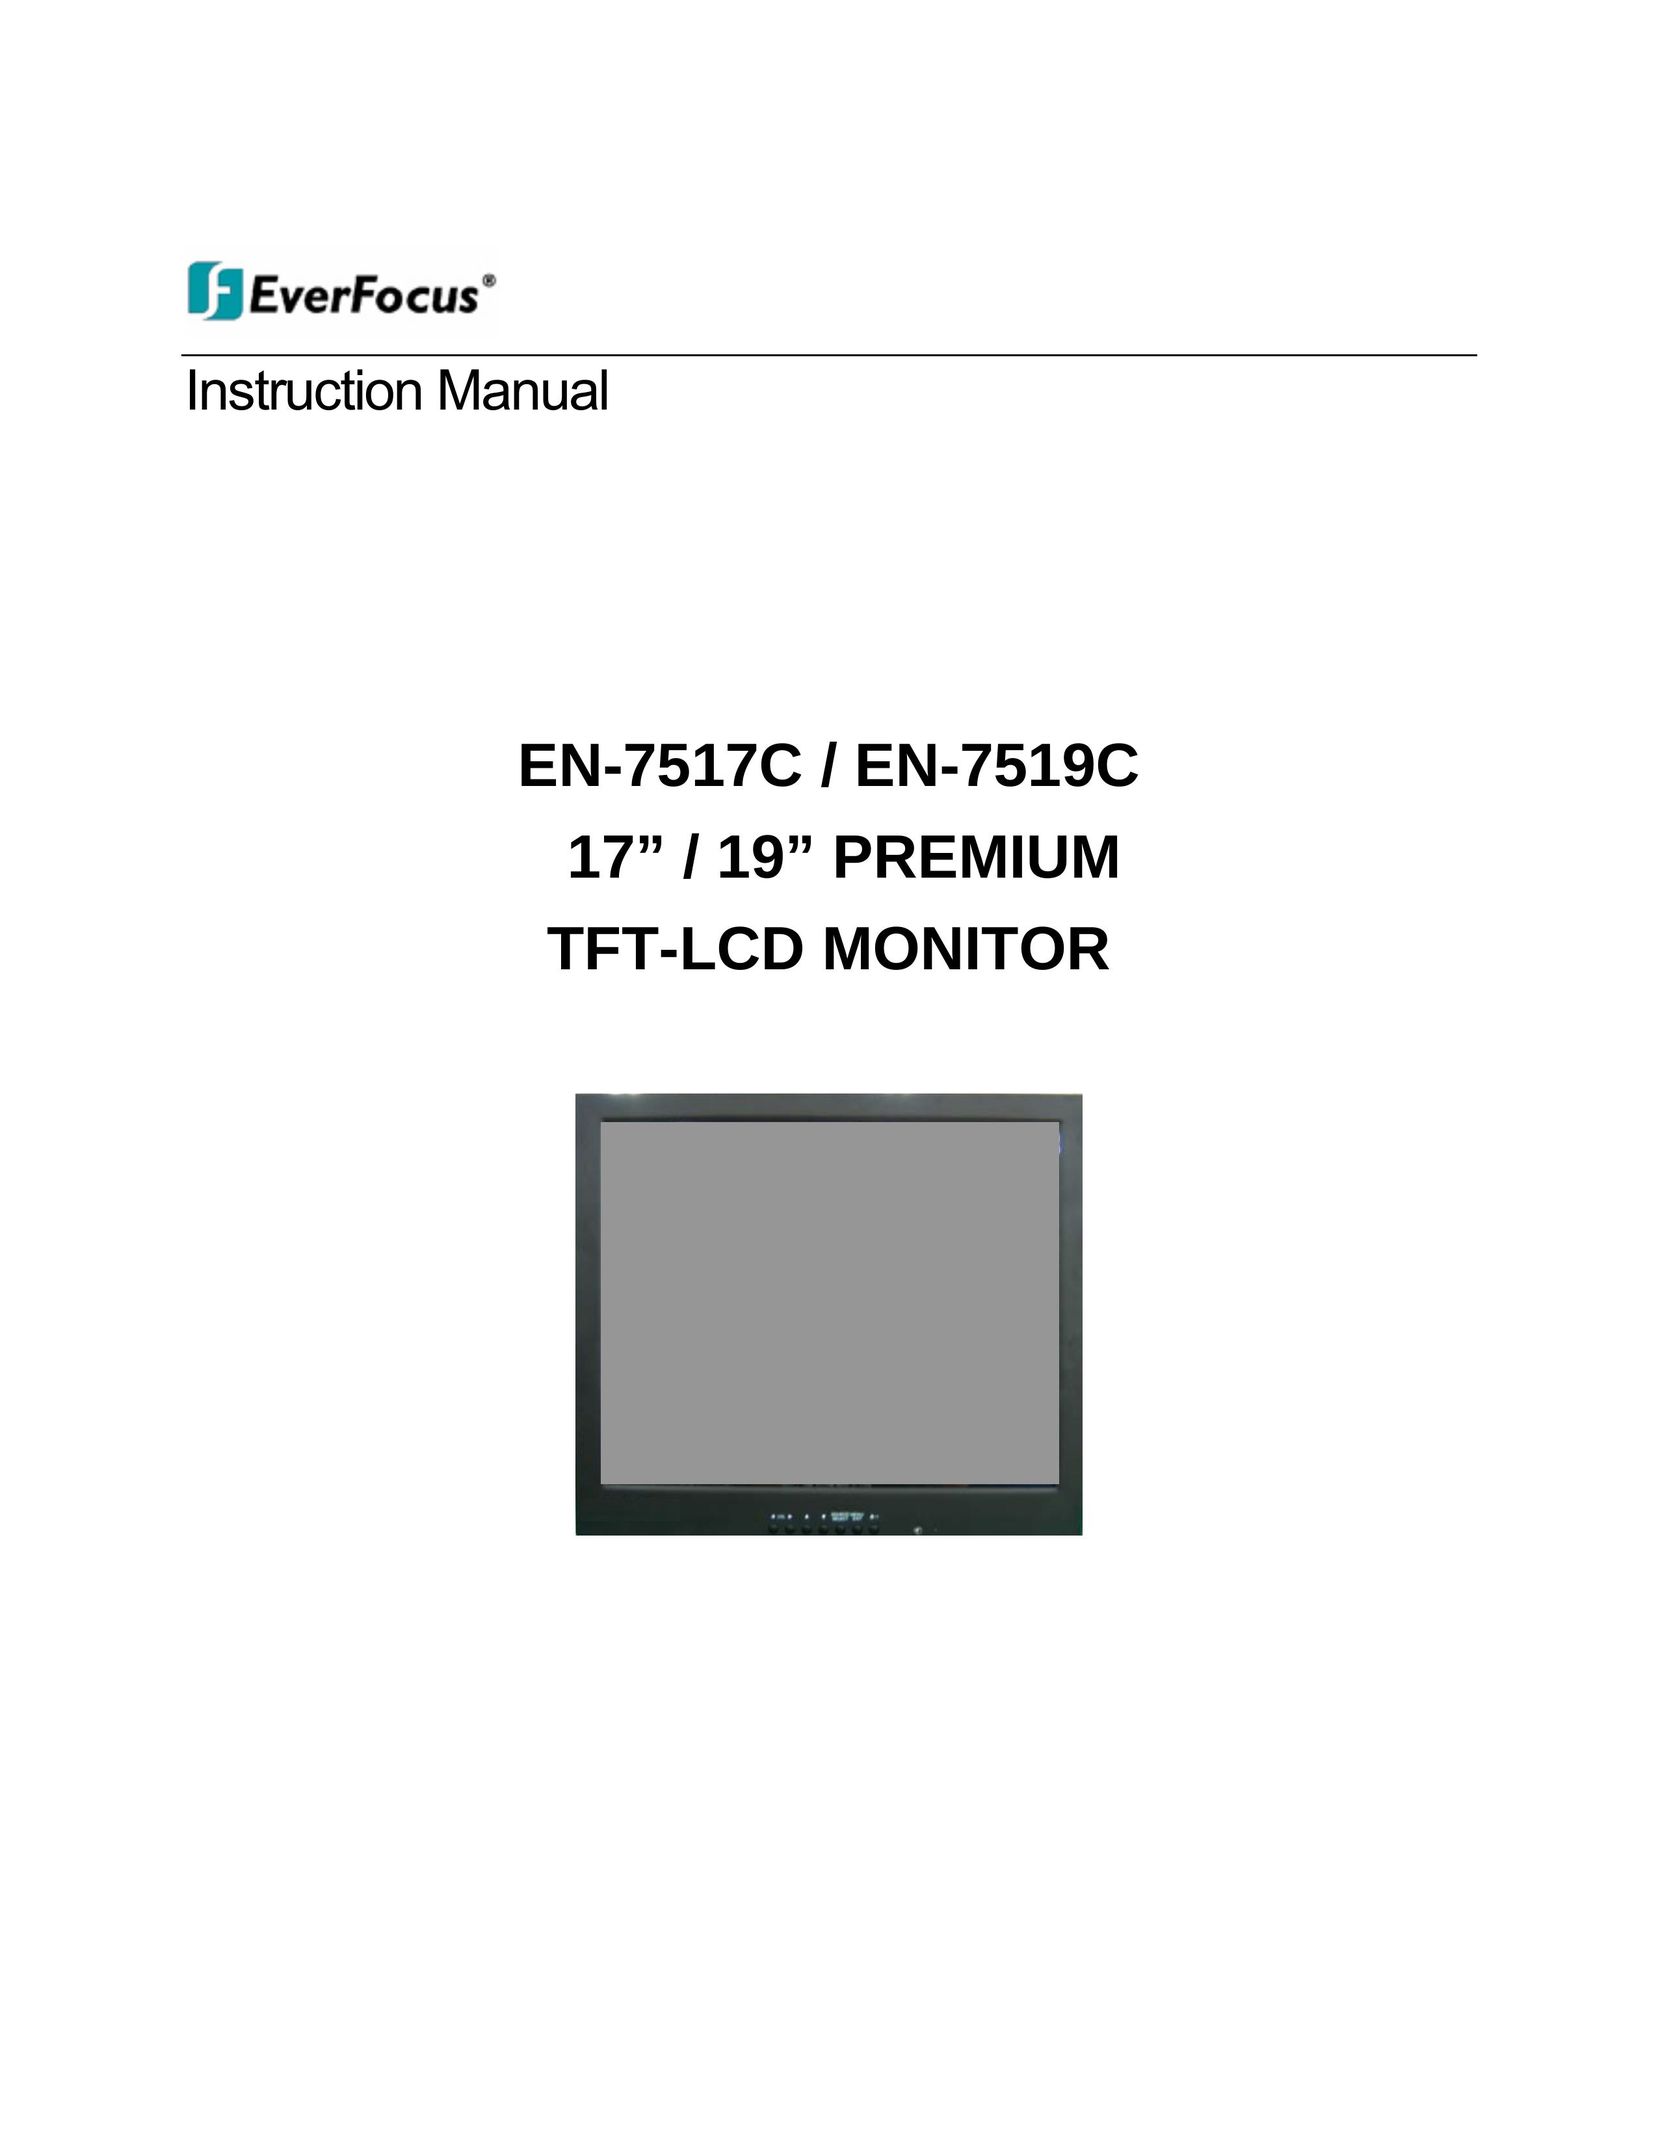 EverFocus EN-7519C Computer Monitor User Manual